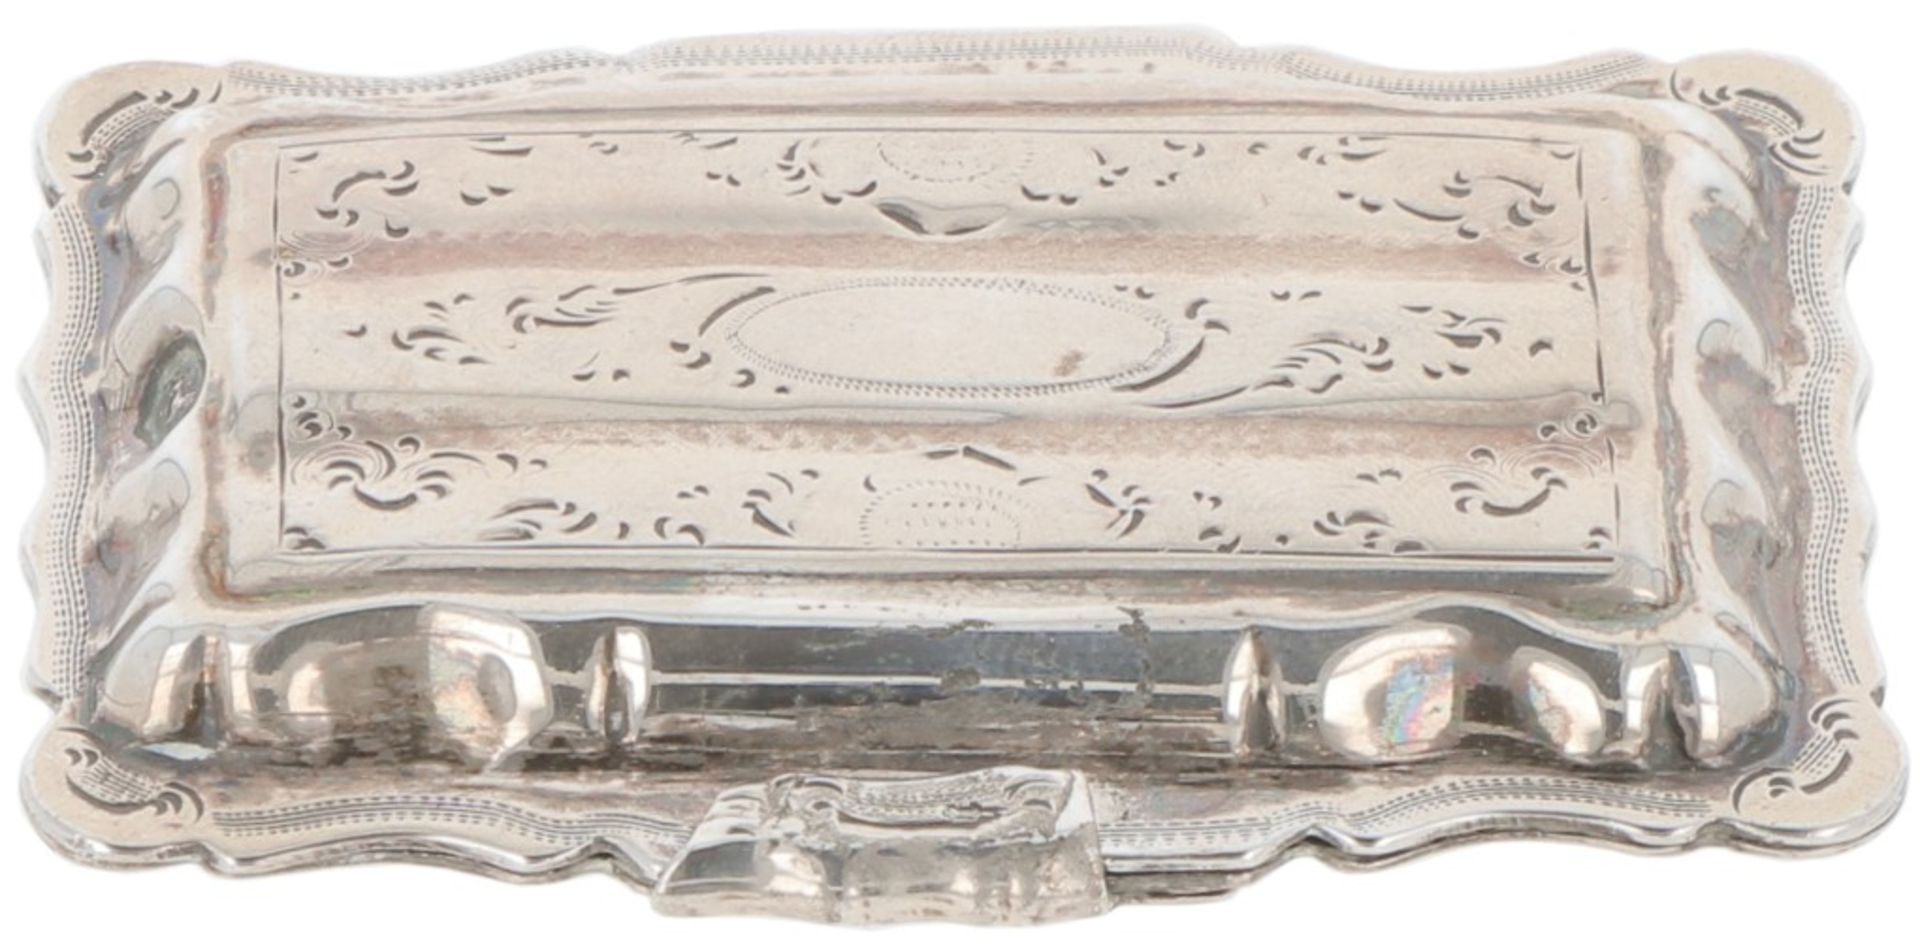 Vesta case / Tinder box silver.